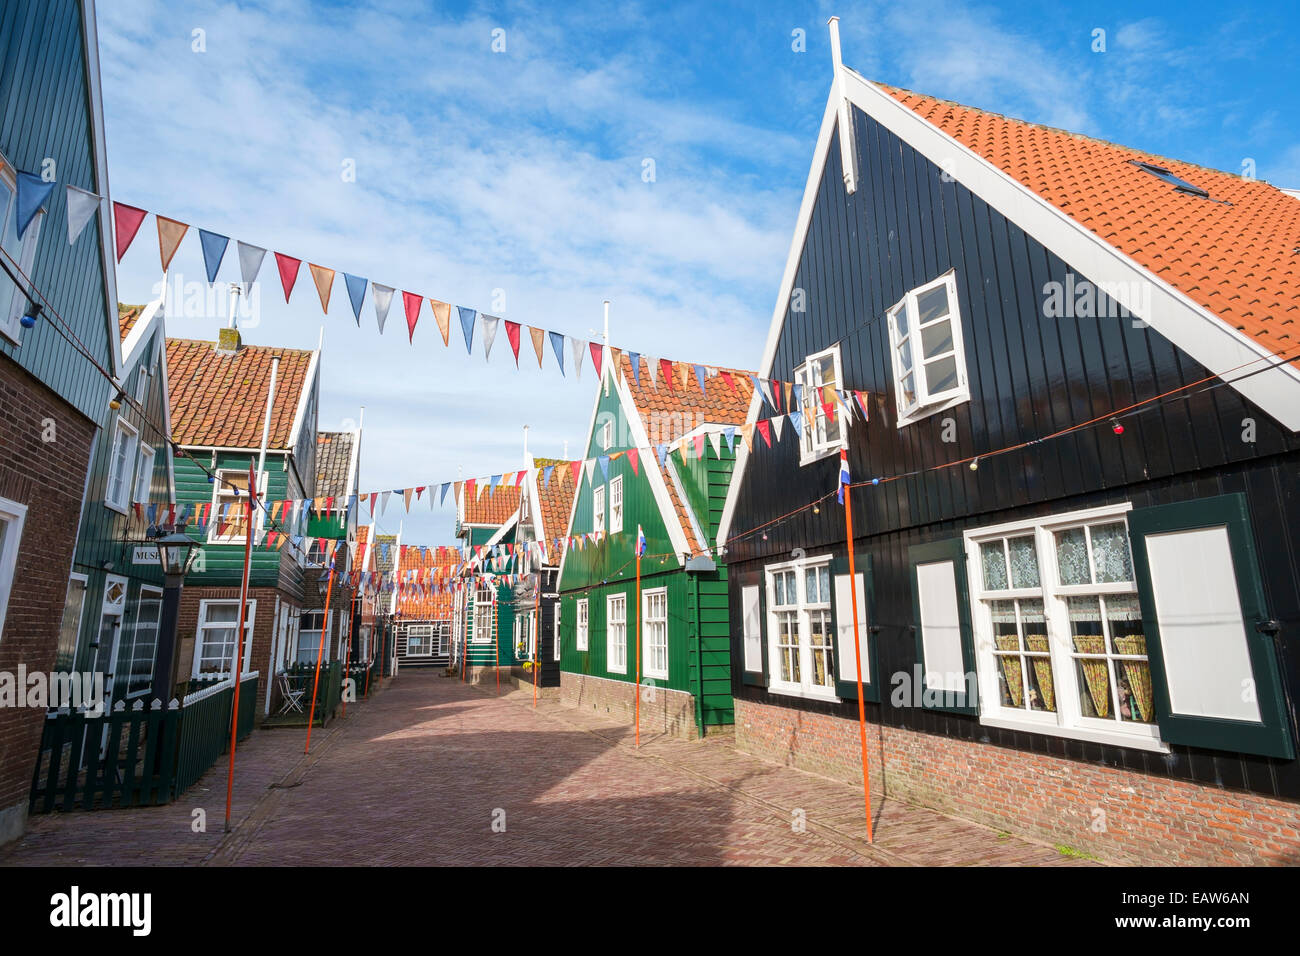 Traditionelle Holzhäuser in Marken, Nordholland, Niederlande Stockfoto